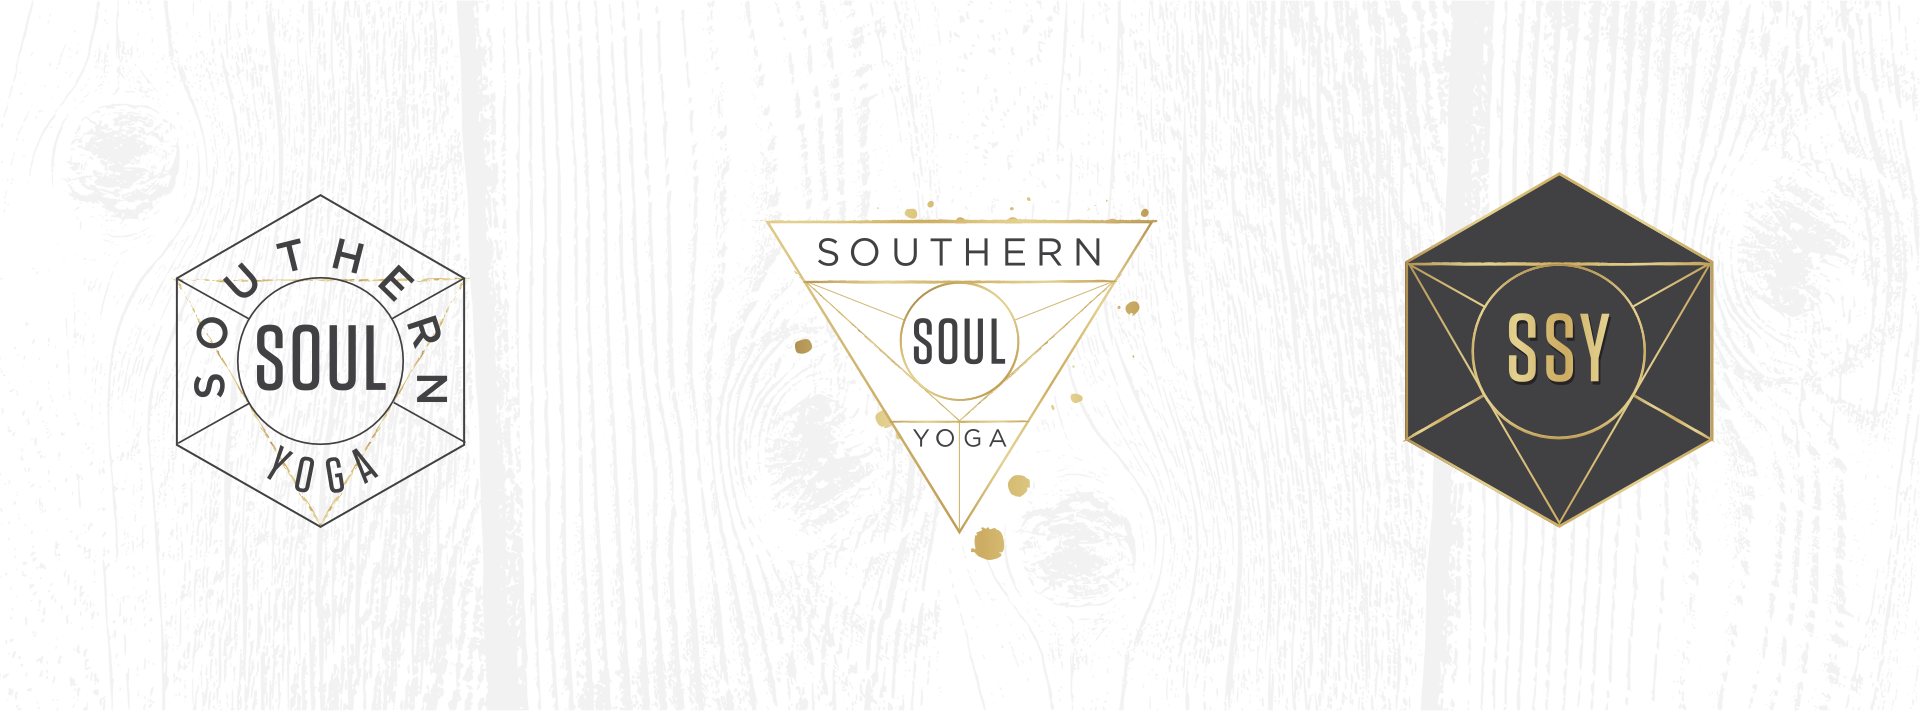 Southern Soul Yoga Mark Variations